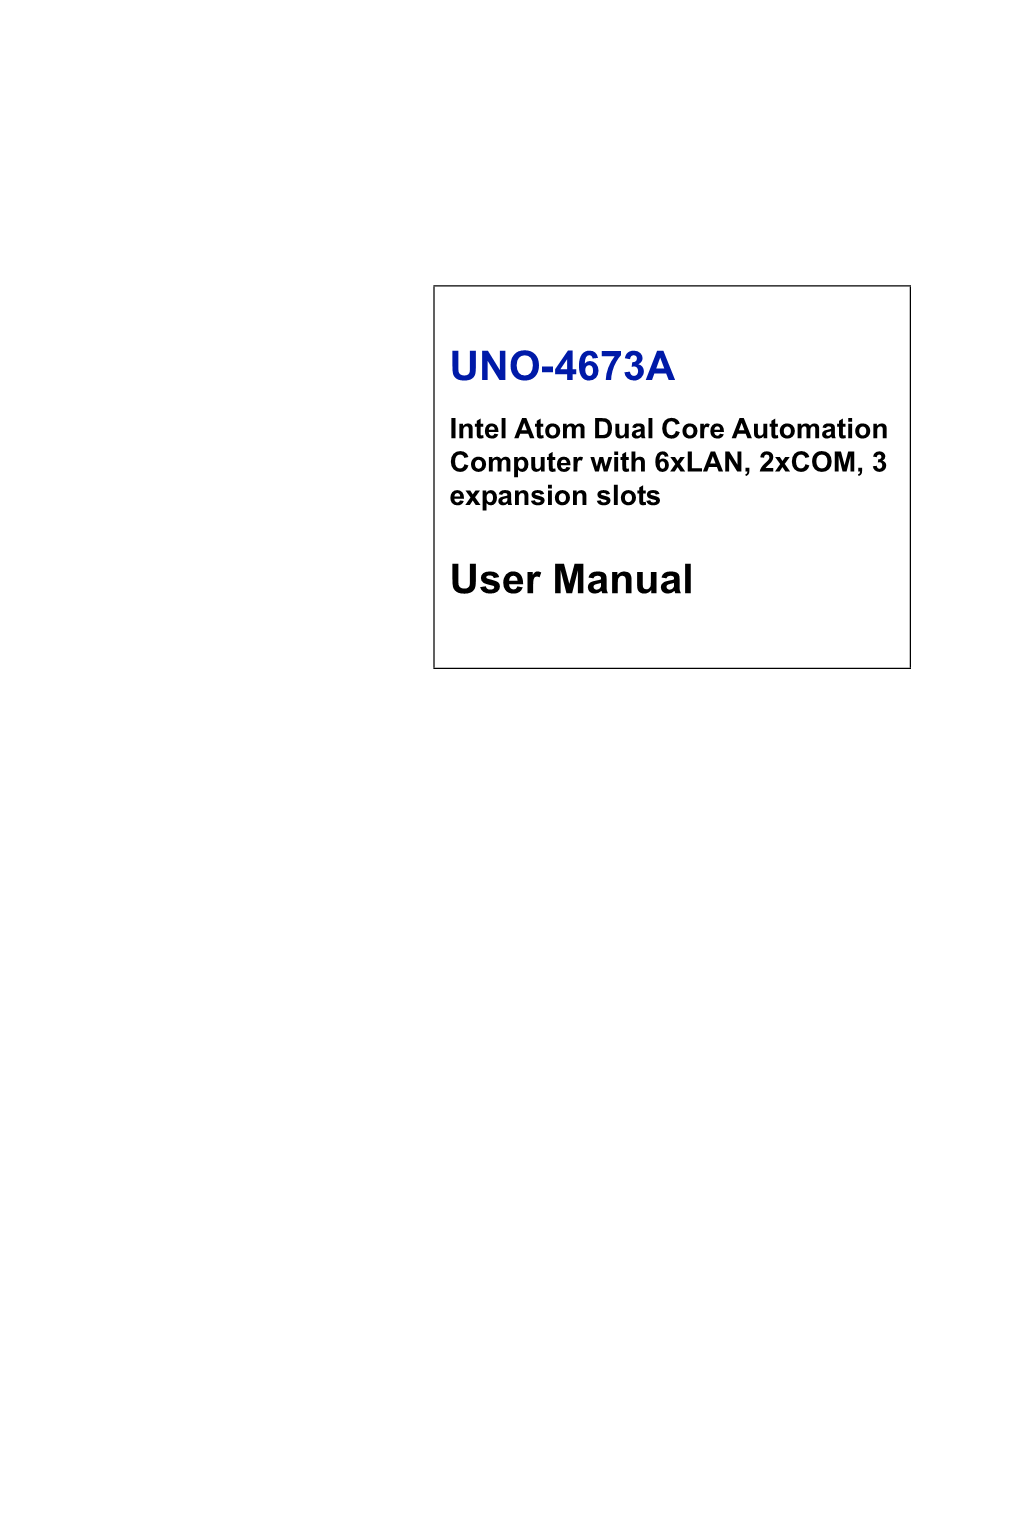 UNO-4673A User Manual